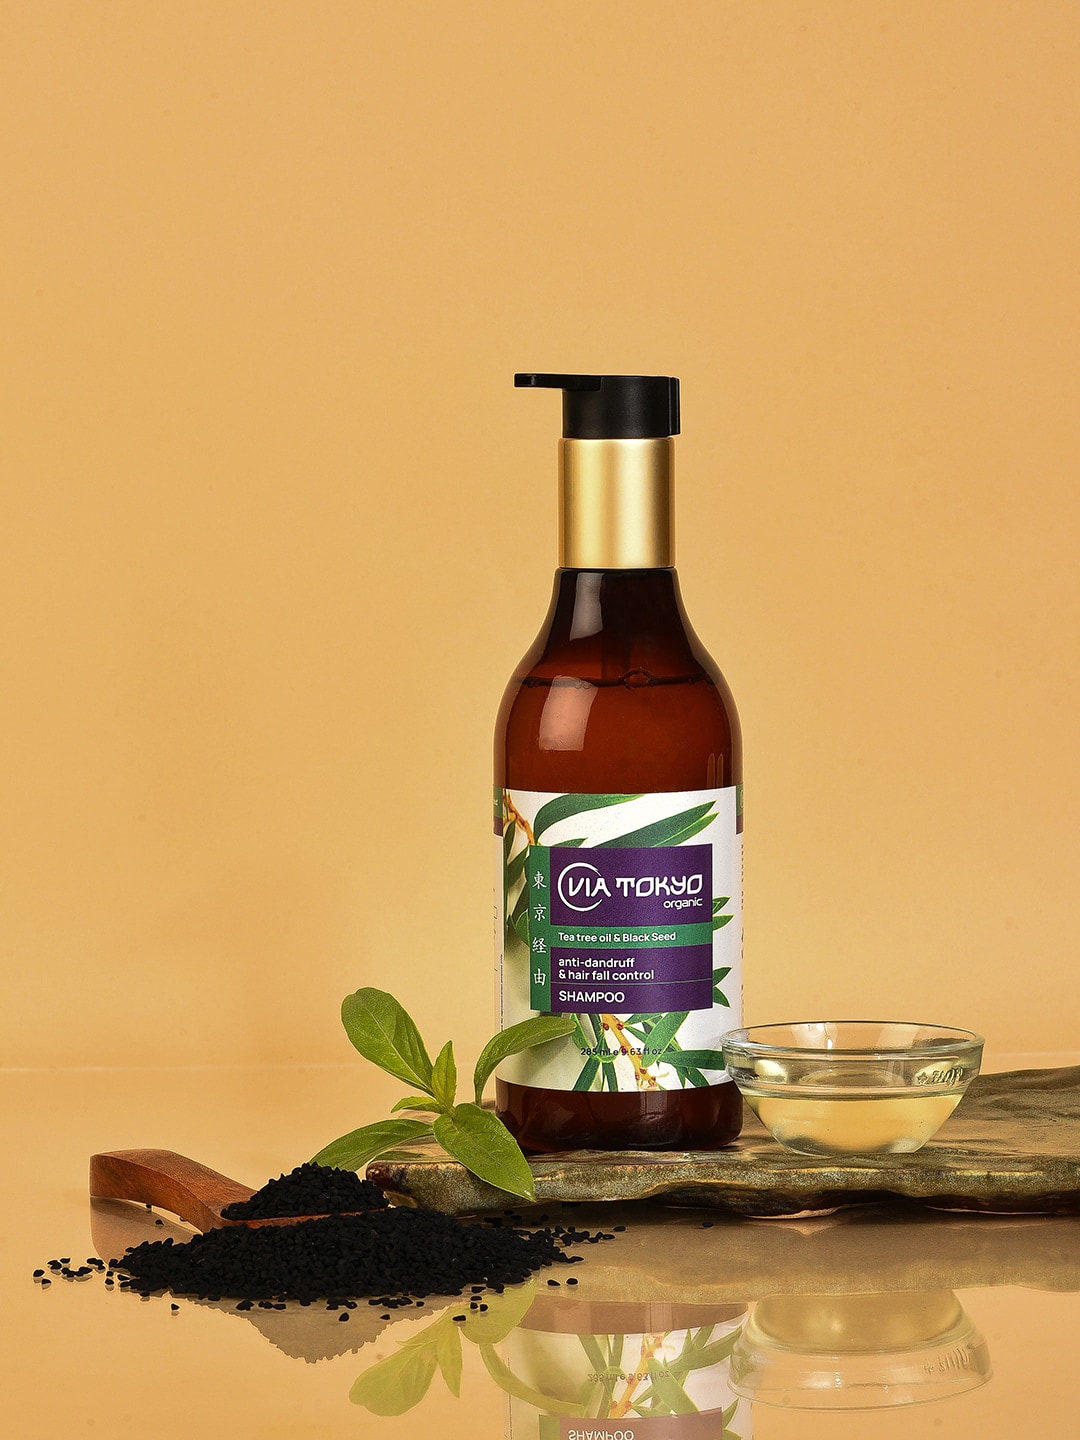 VIA TOKYO ORGANIC Black Seed & Tea Tree Oil Shampoo - 285 ml Price in India